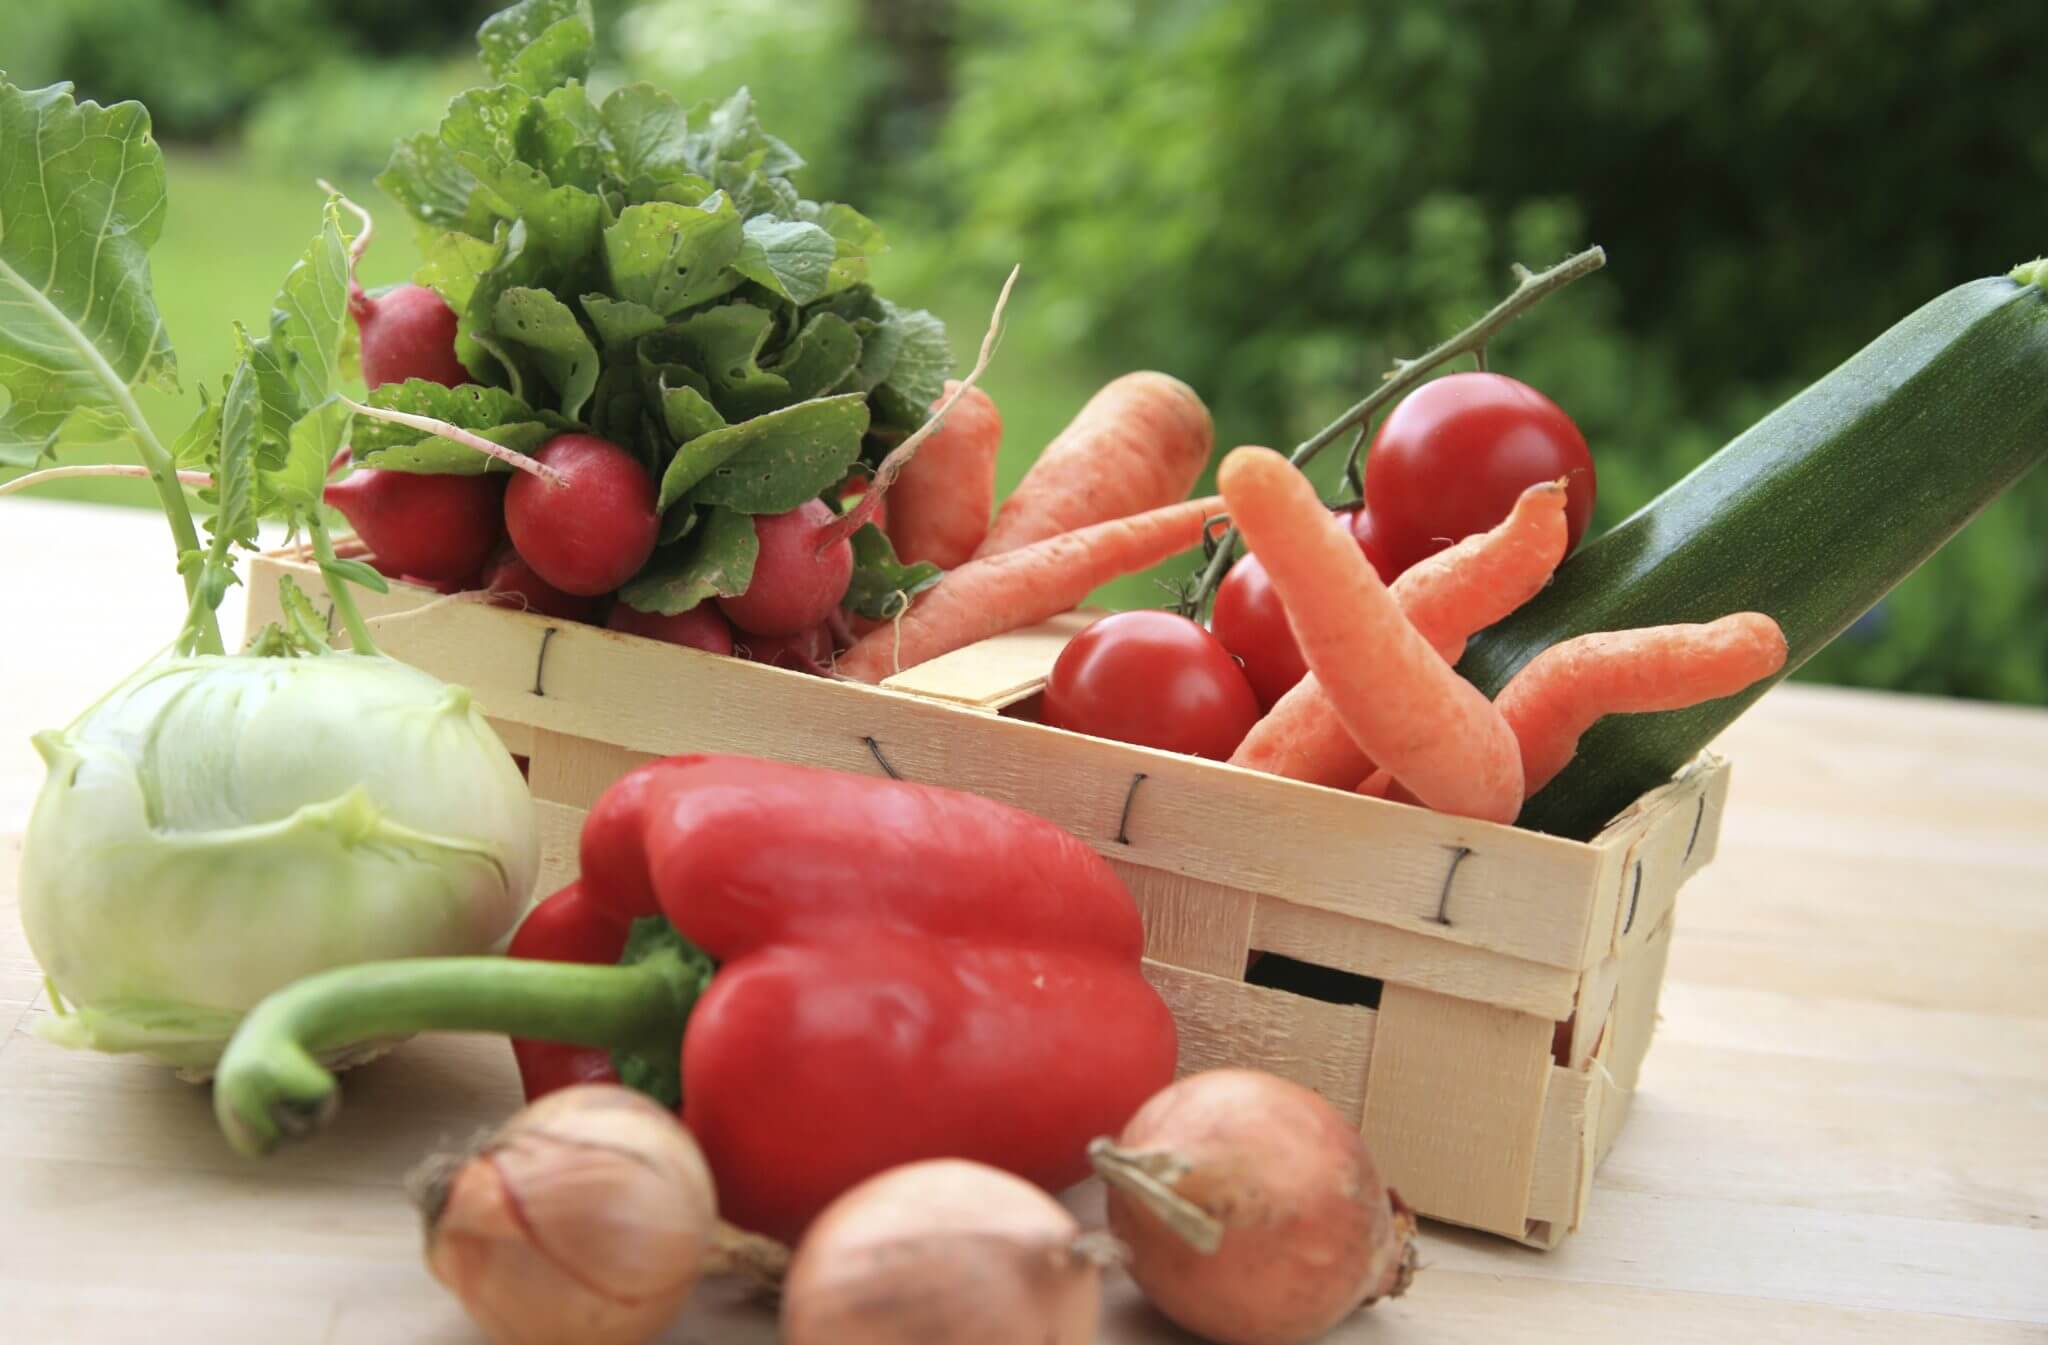 Home grown Vegetables in a basket